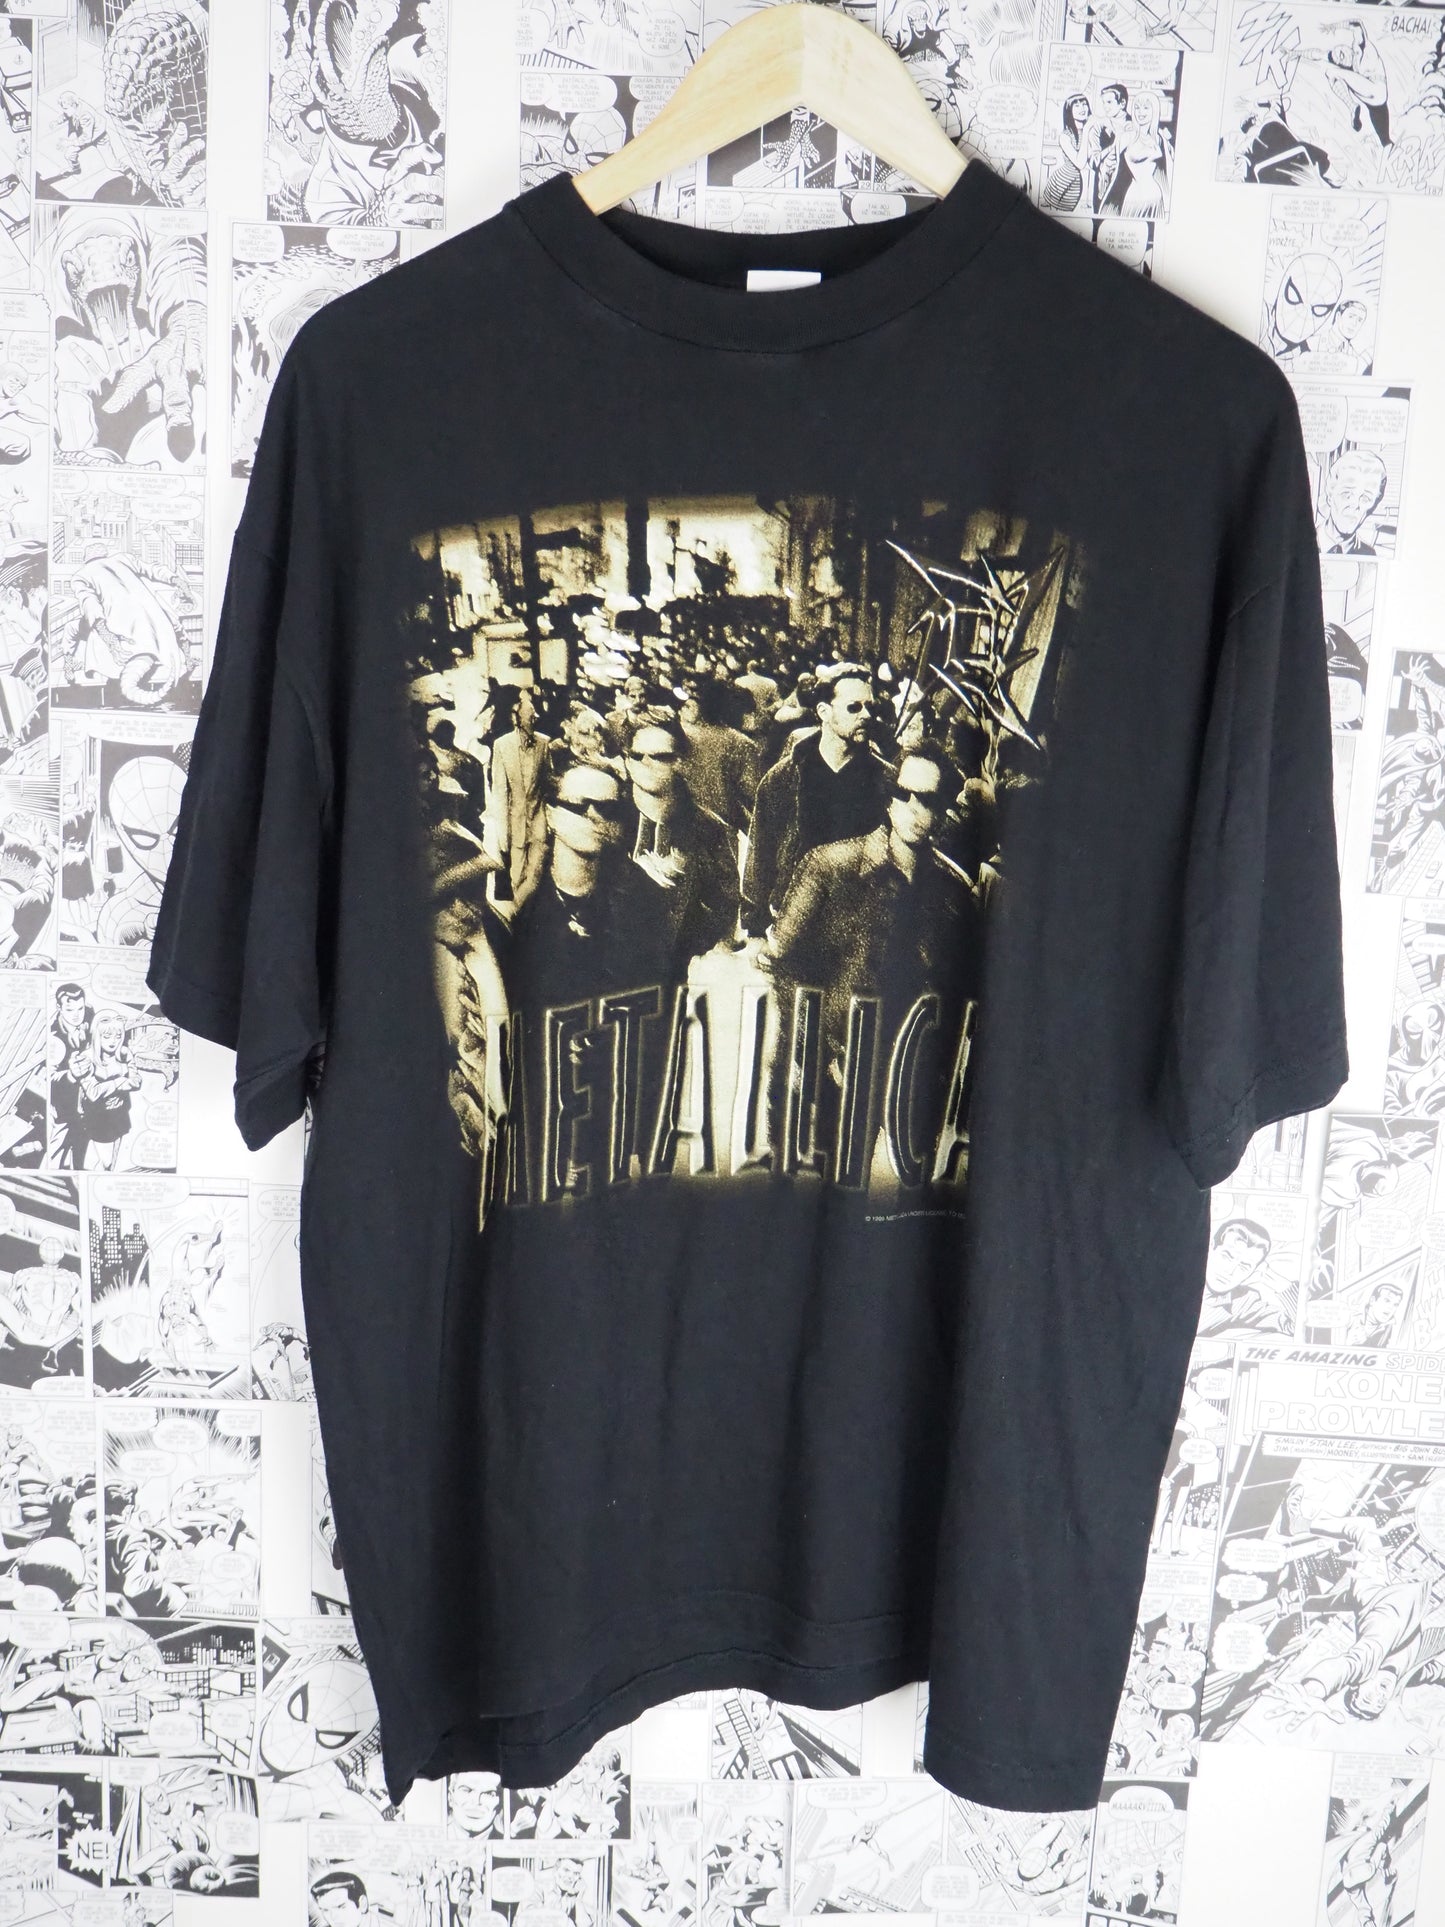 Vintage Metallica 1996 t-shirt - size XL